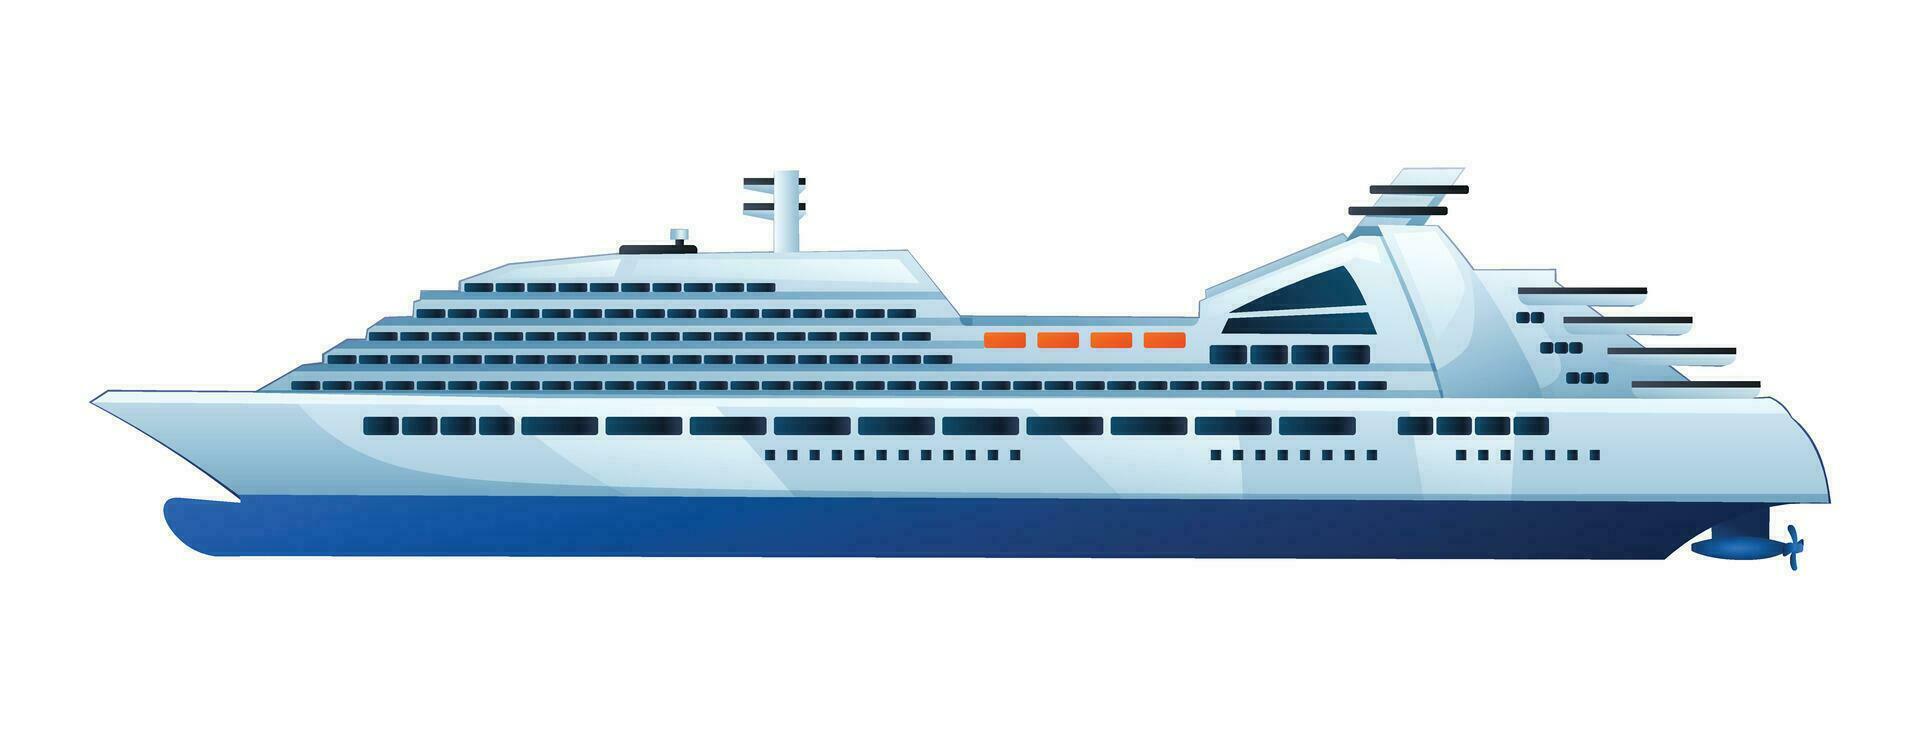 Sea cruise ship vector cartoon illustration isolated on white background